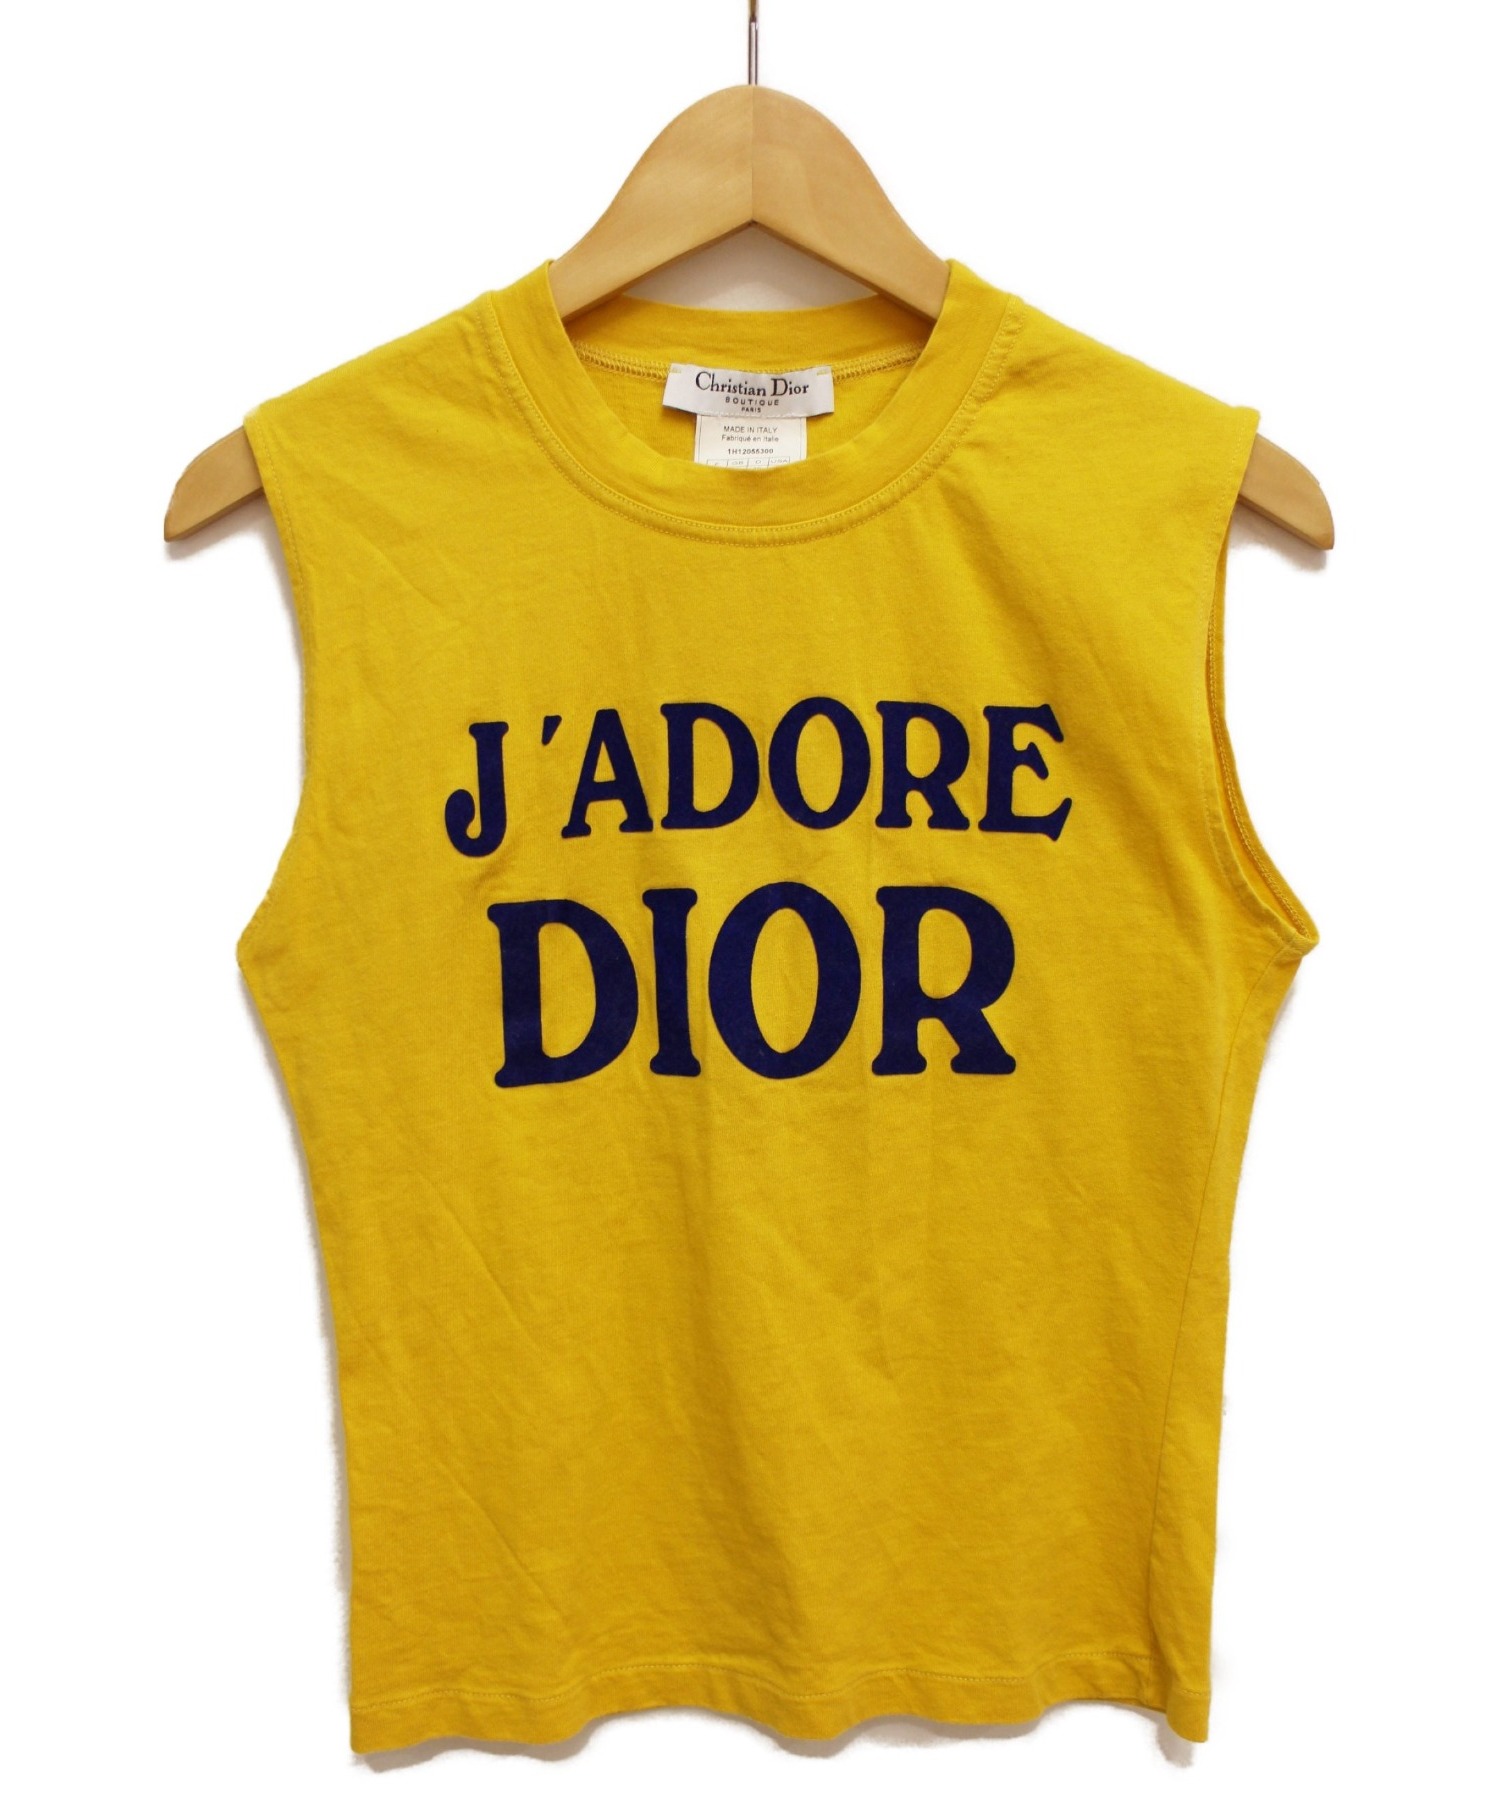 Christian Dior (クリスチャンディオール) ノースリーブTシャツ マスタード サイズ:38